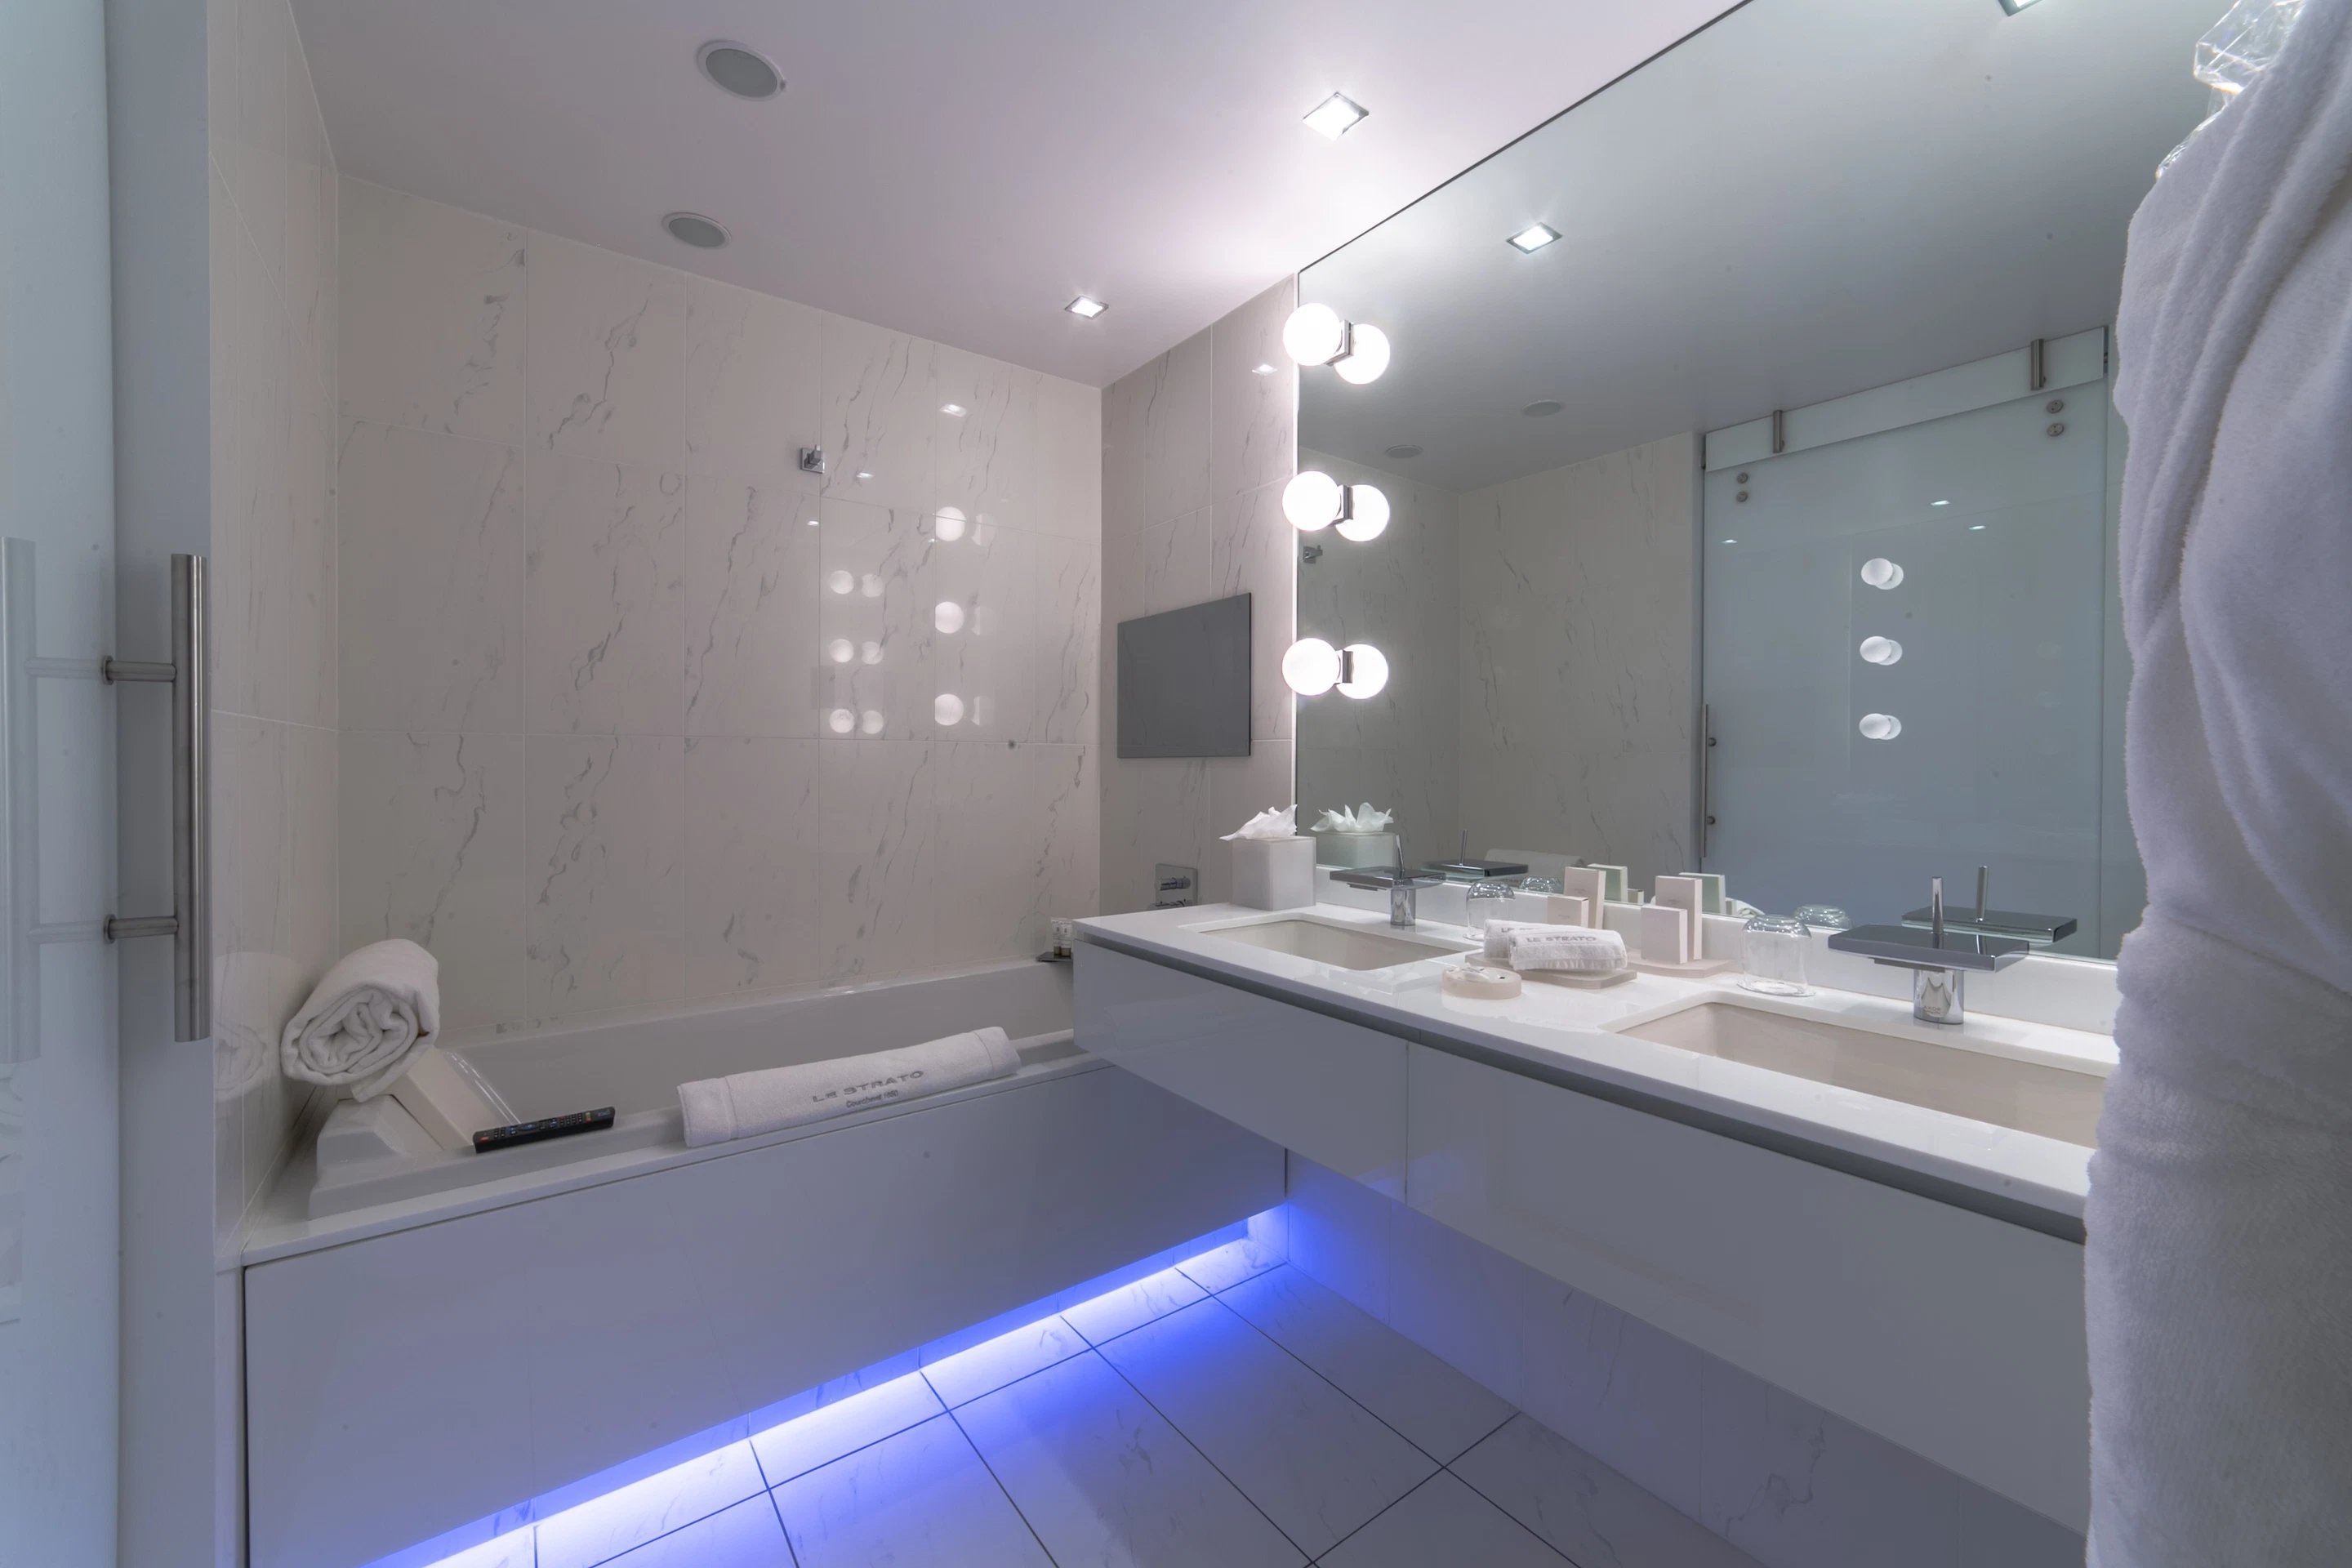 Le Strato - Duplex luxe - Salle de bain